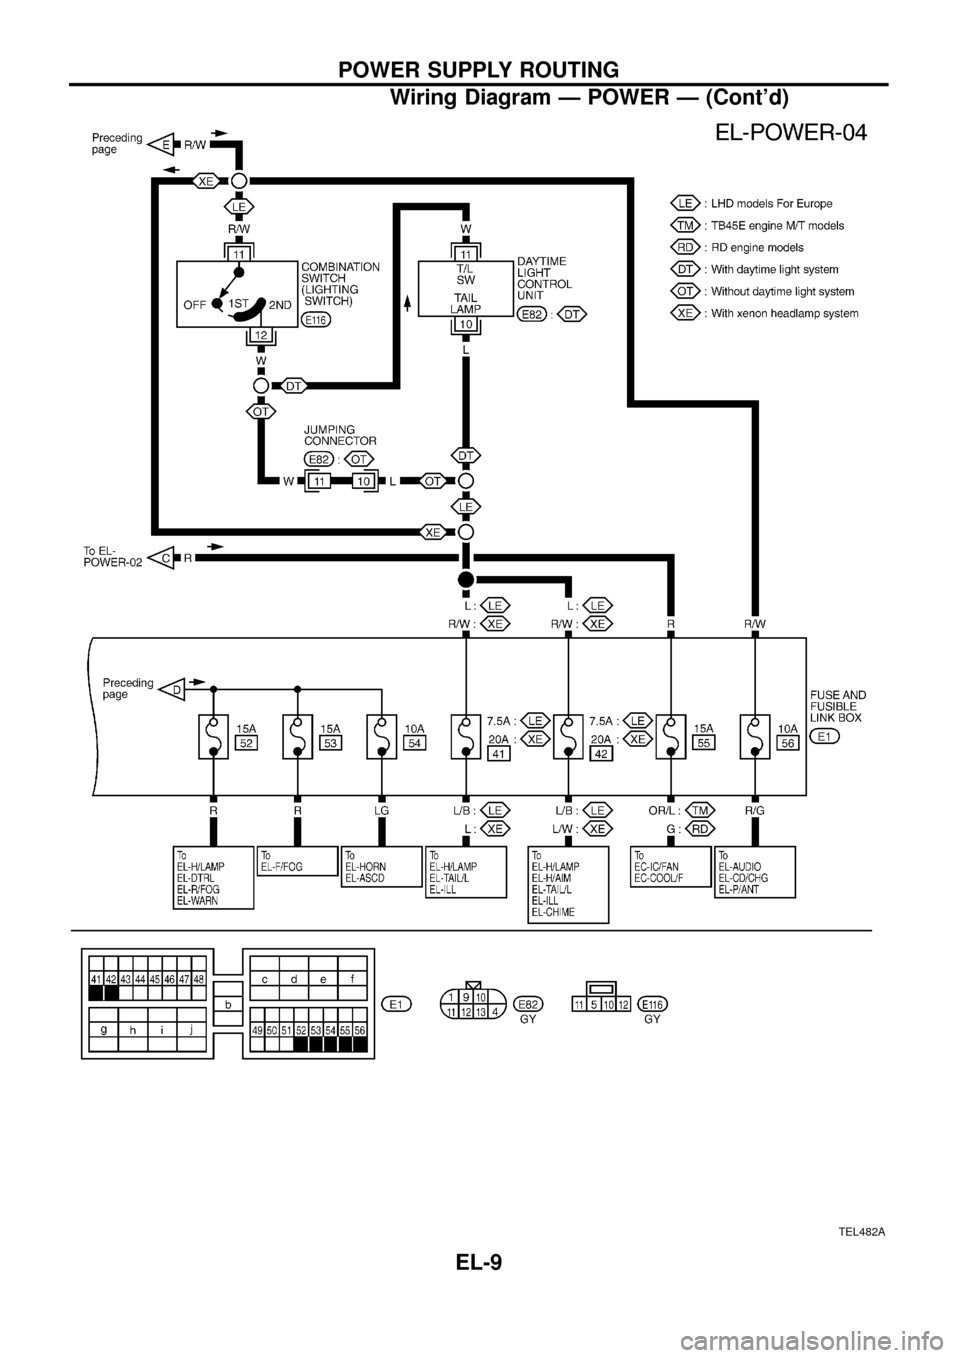 NISSAN PATROL 1998 Y61 / 5.G Electrical System Workshop Manual TEL482A
POWER SUPPLY ROUTING
Wiring Diagram Ð POWER Ð (Contd)
EL-9 